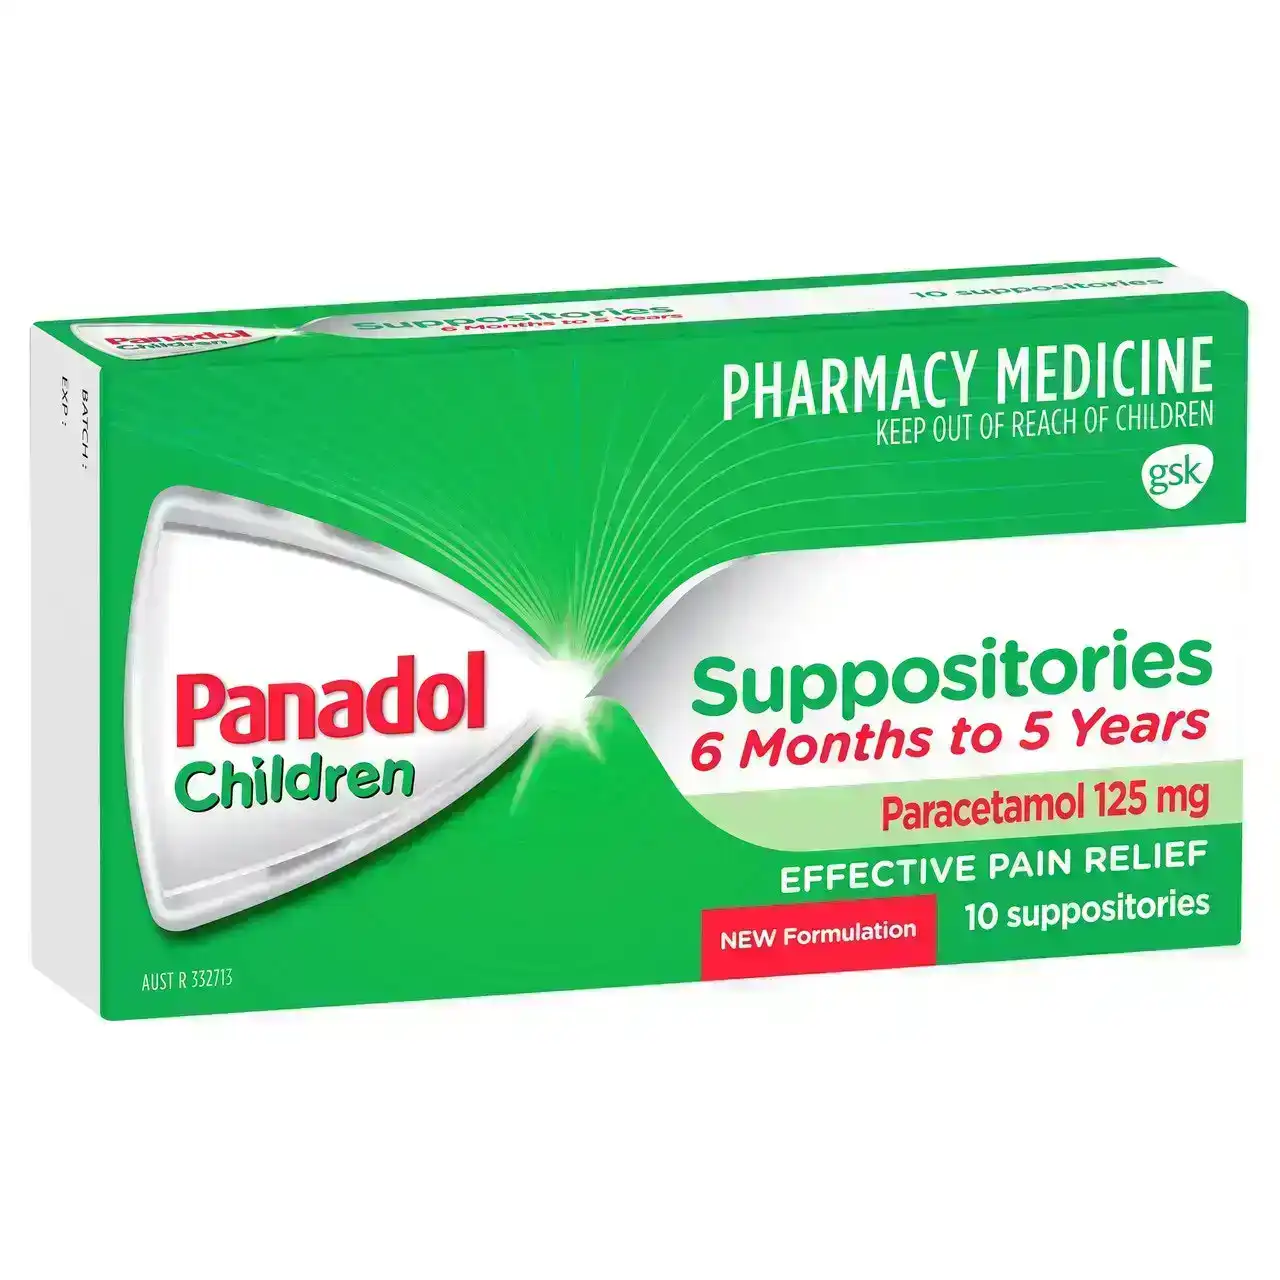 Panadol Children Suppositories 6 Months - 5 Years, 125mg 10 Pack